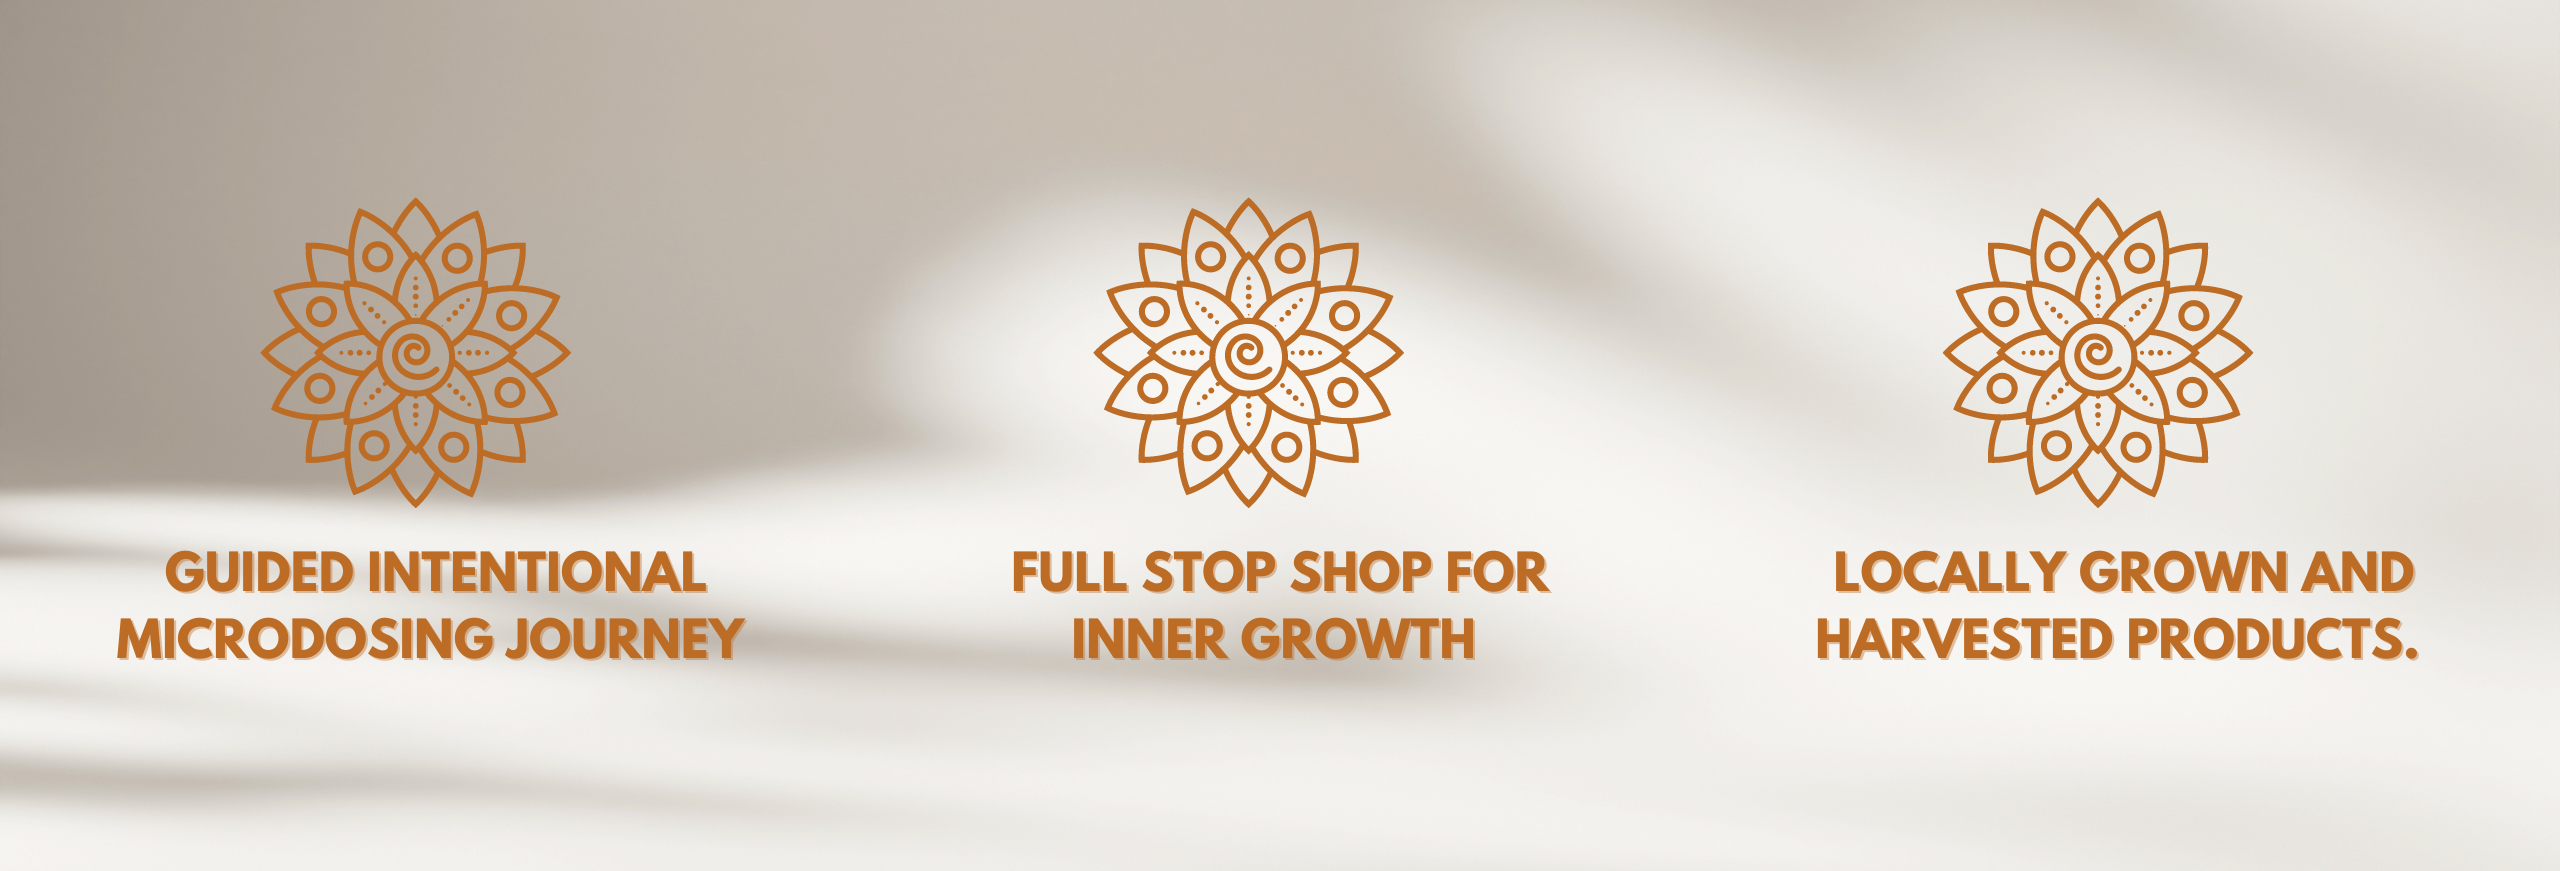 Full stop shop for inner growth